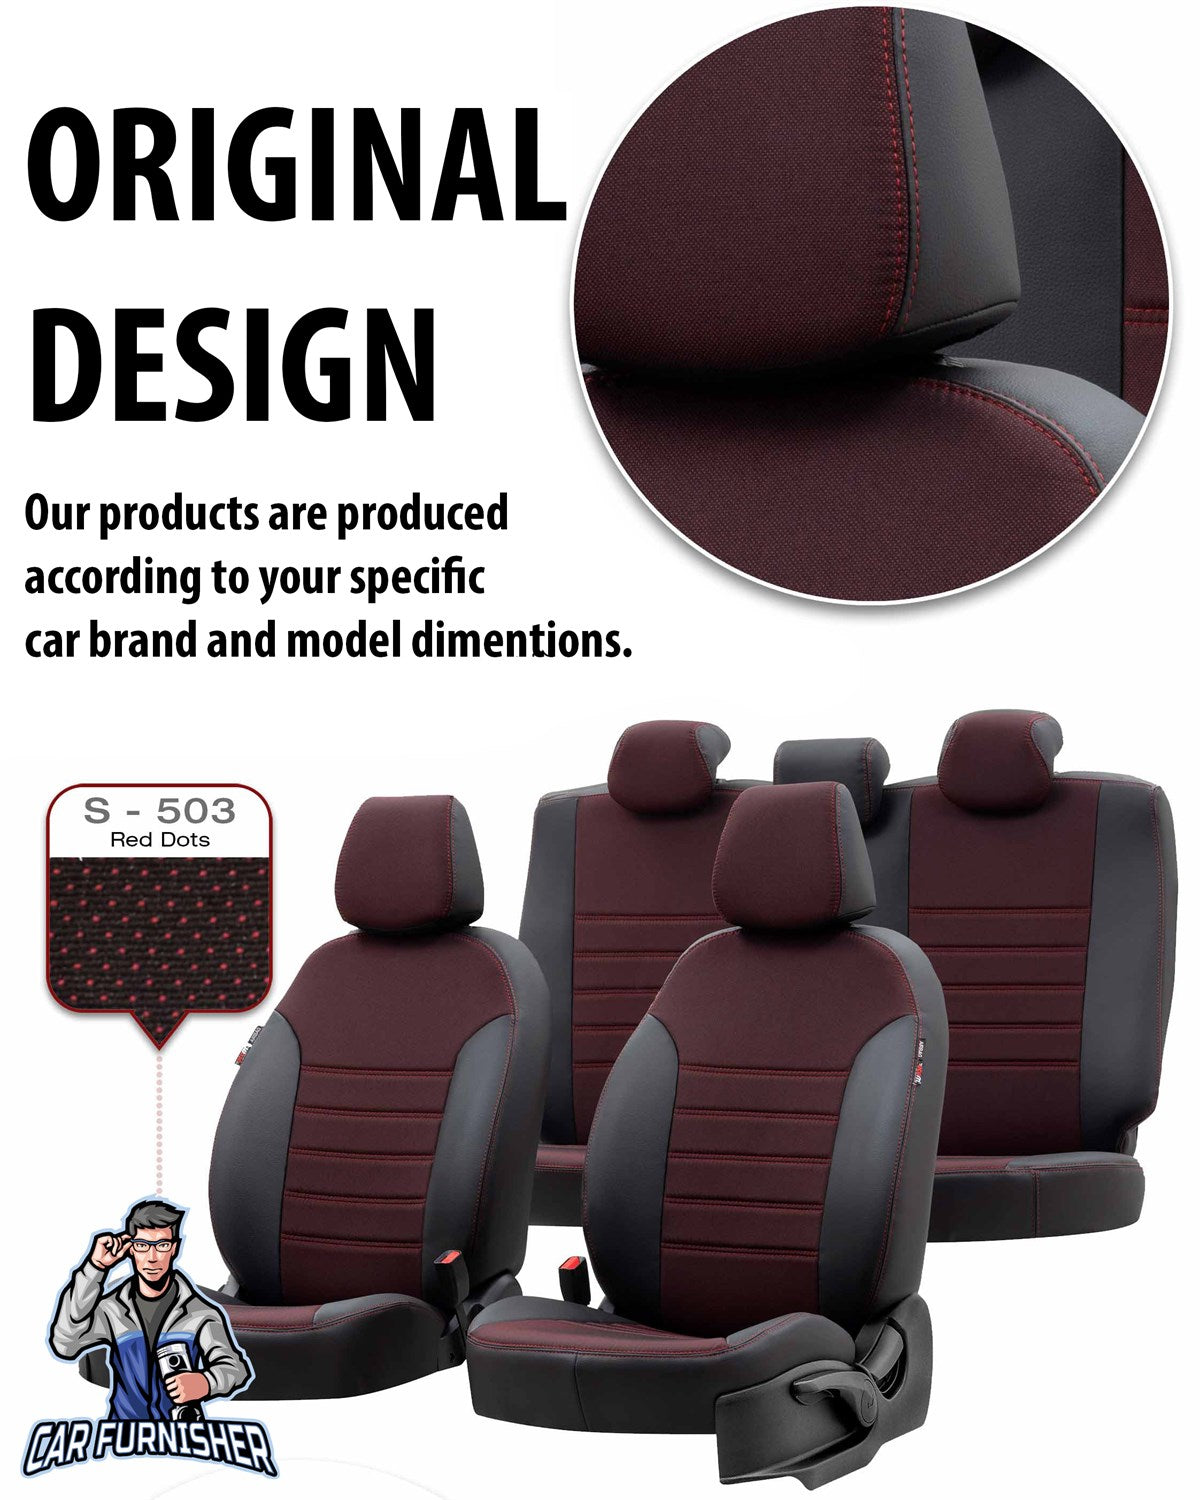 Mitsubishi Attrage Seat Covers Paris Leather & Jacquard Design Blue Leather & Jacquard Fabric